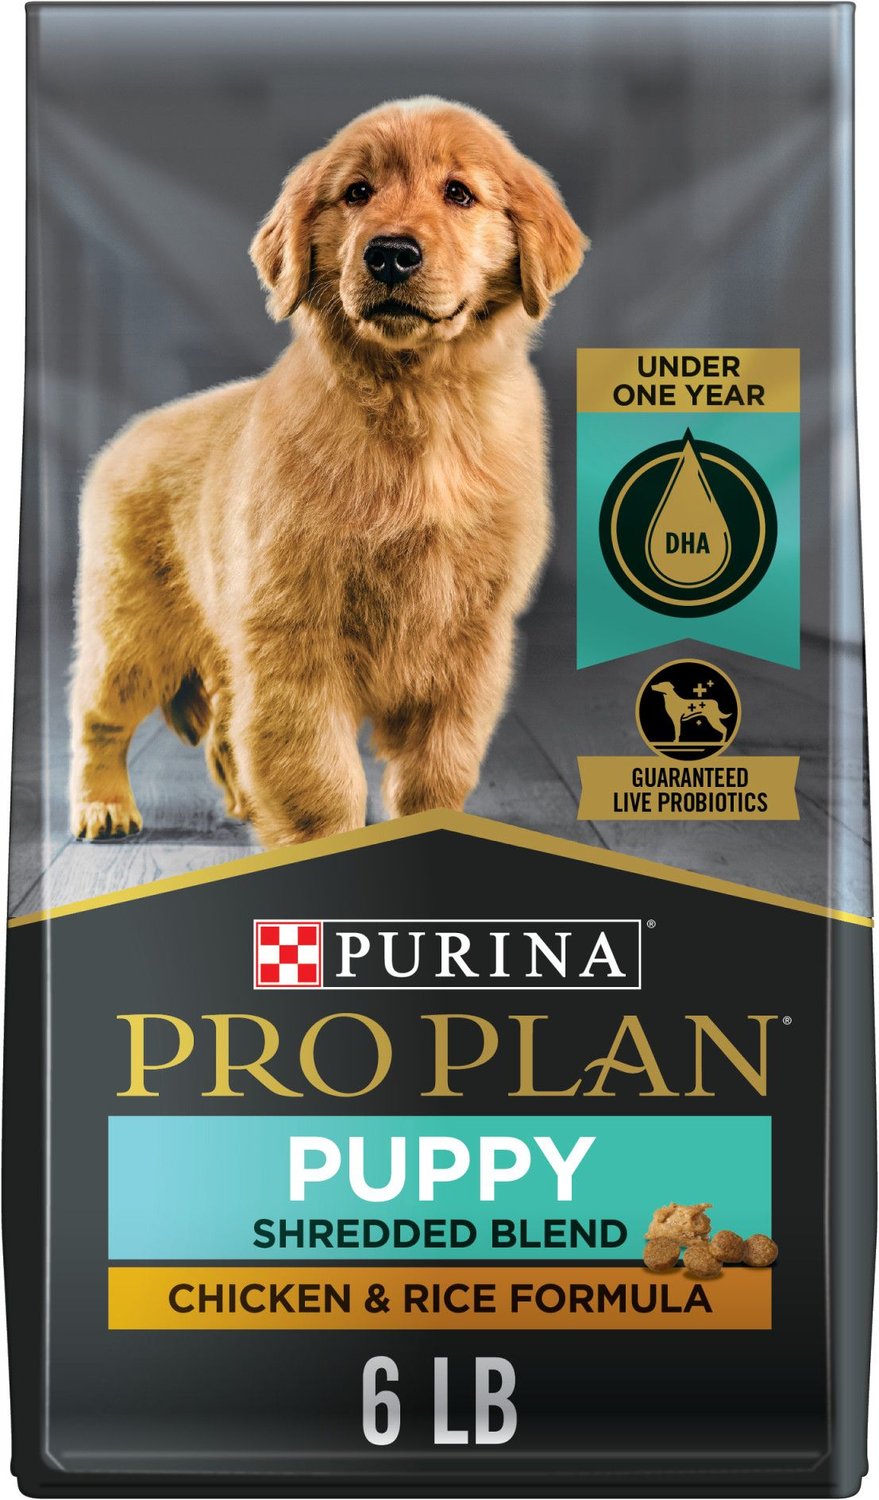 Purina Pro Plan Puppy Focus Feeding Chart